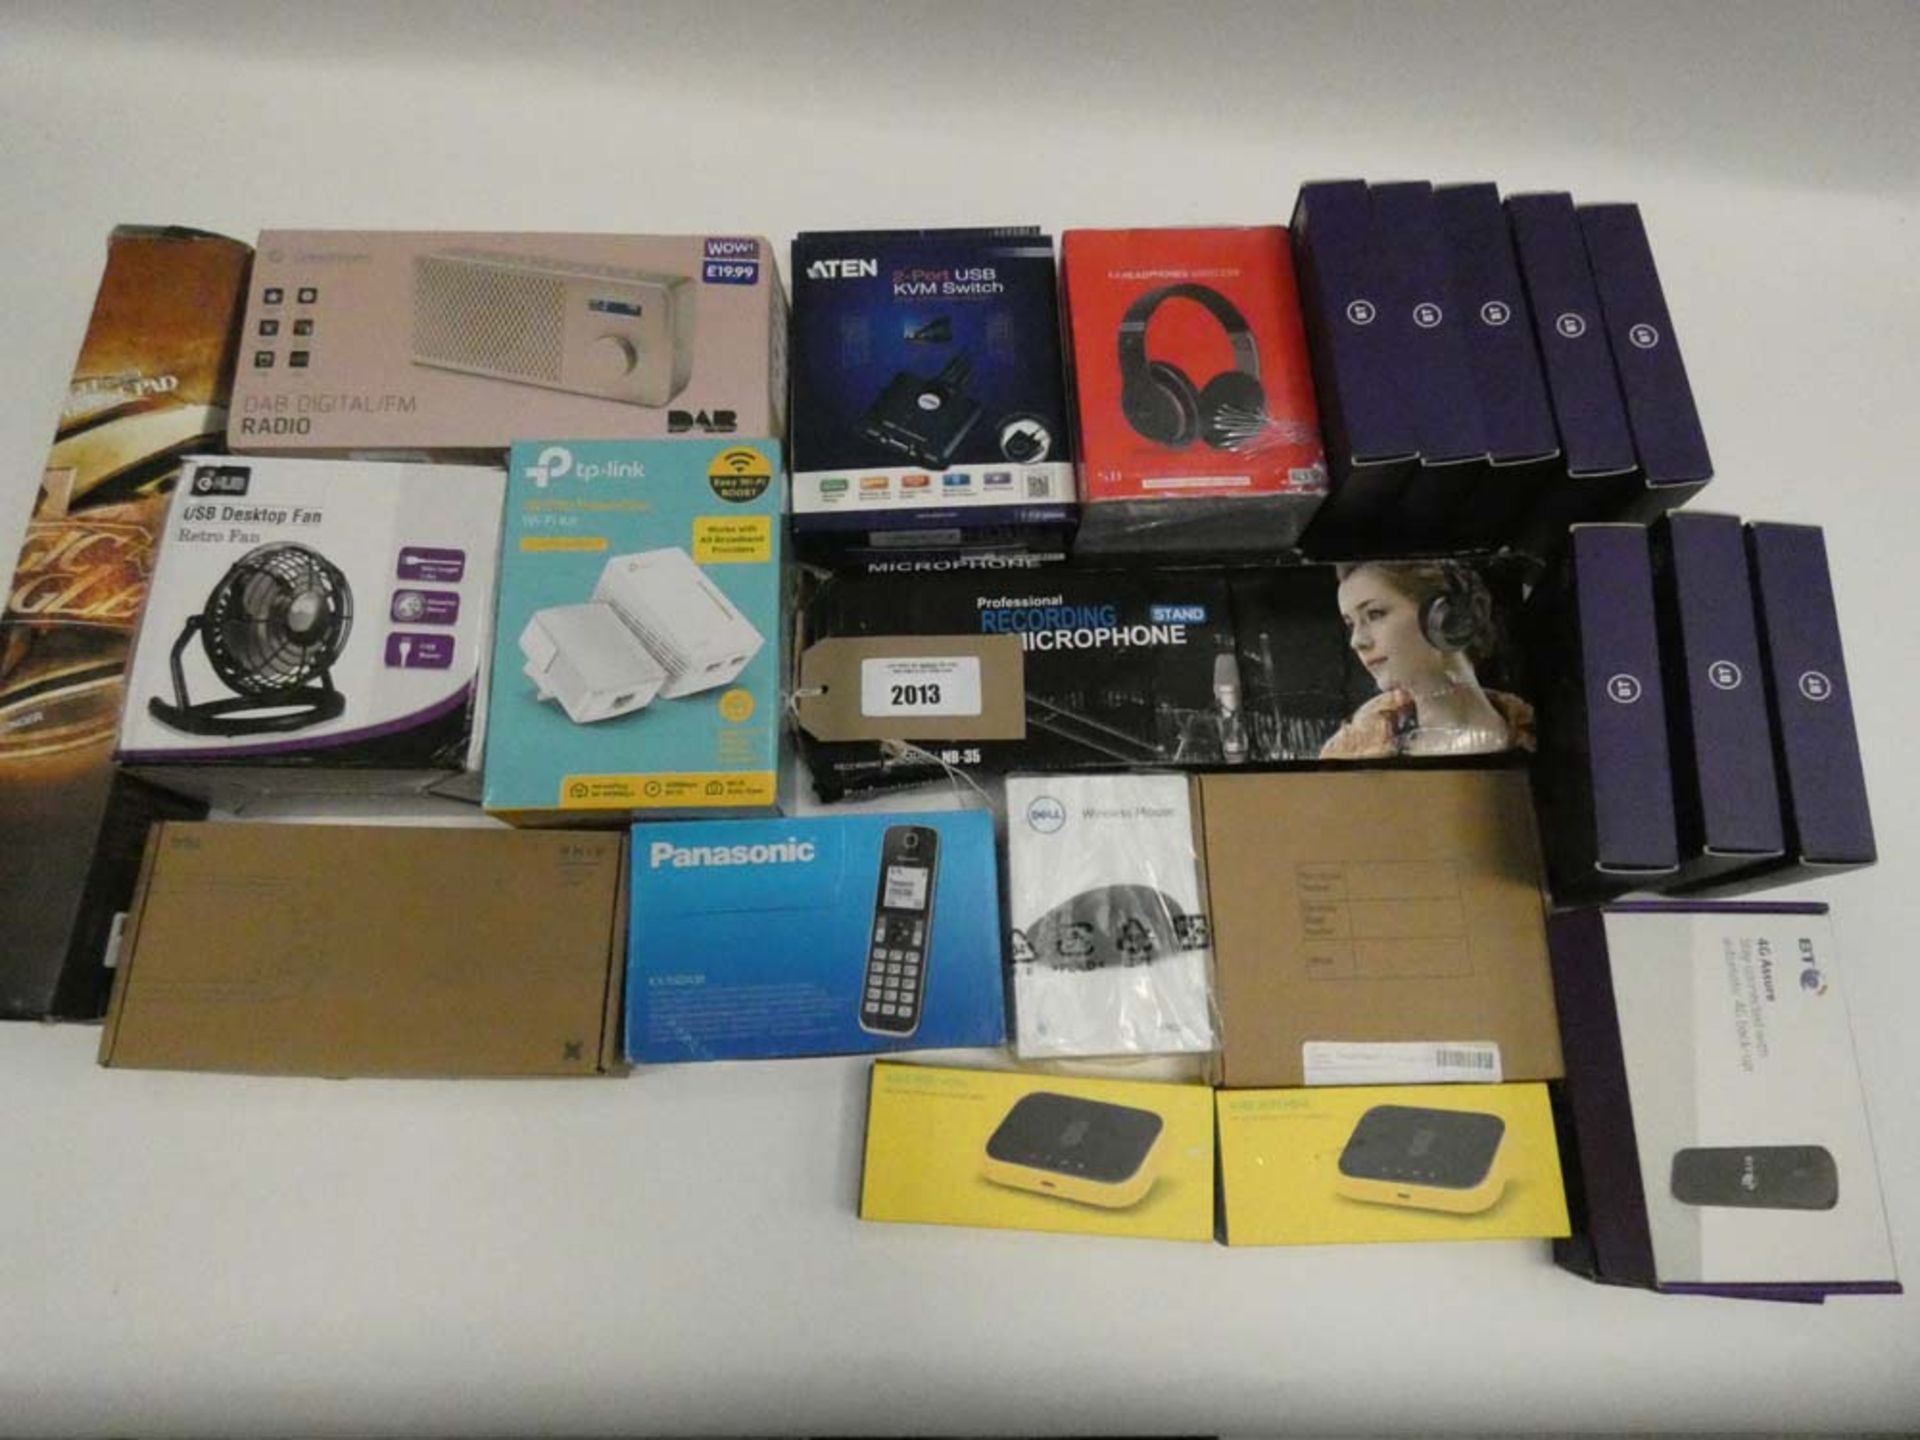 Bag containing BT 4G Assures, DAB digital radio, TP-Link, USB Desktop fan, Panasonic home phone,